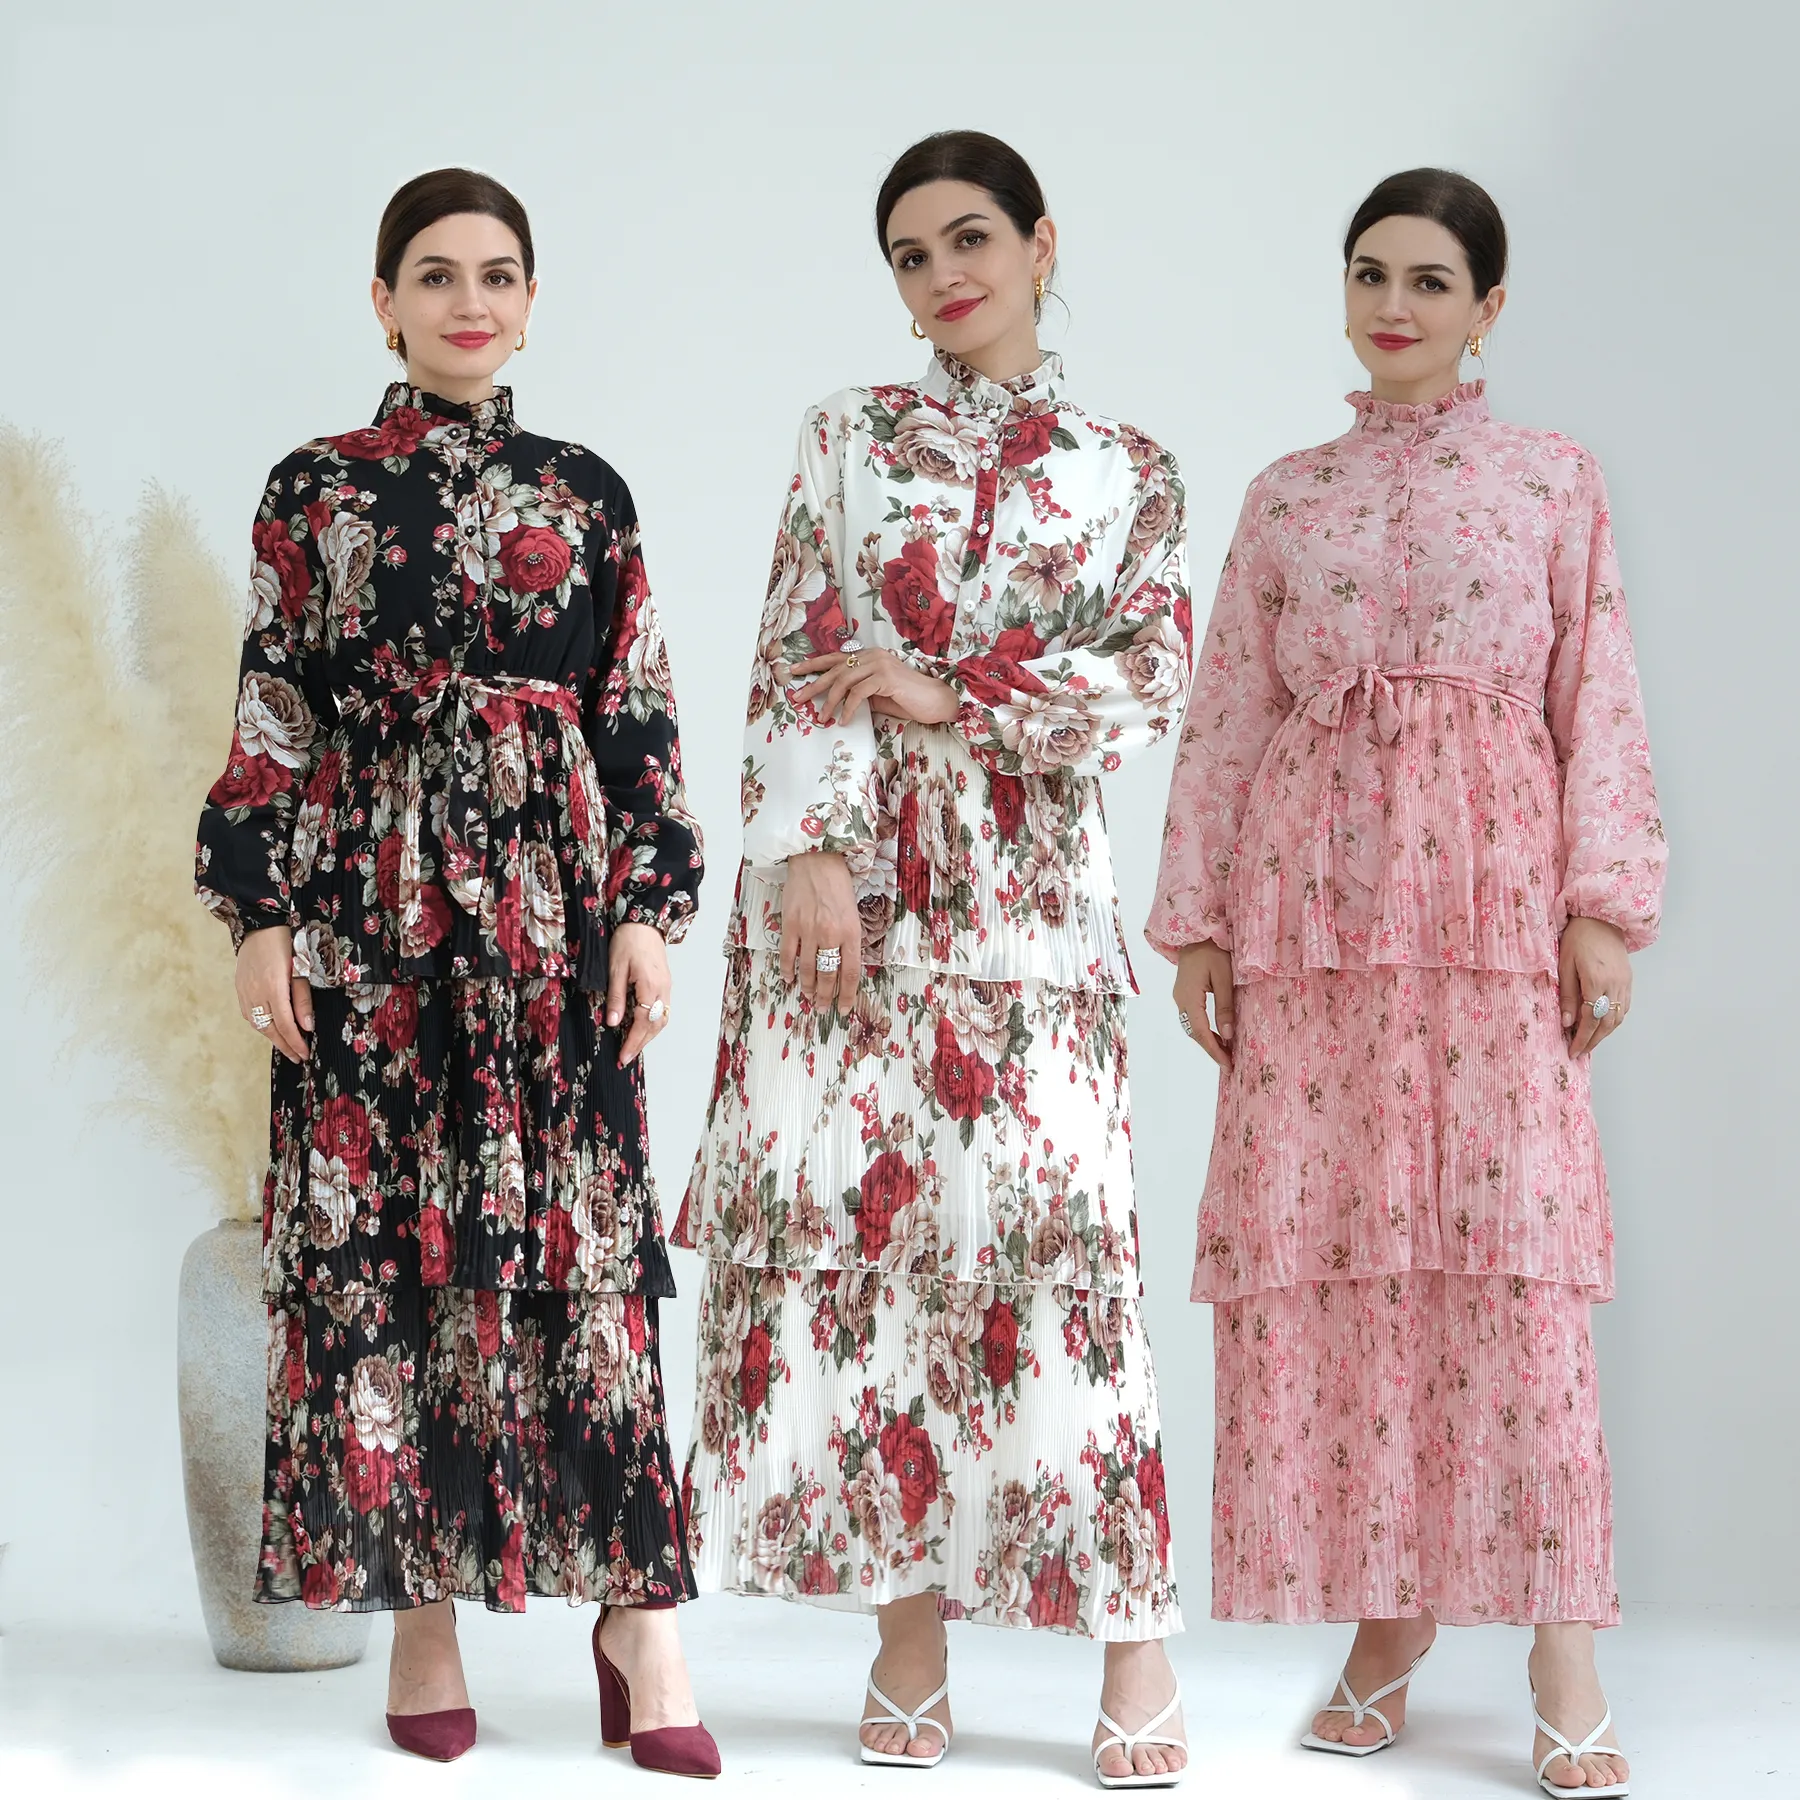 European American Elegant Floral Print 3 layers Chiffon Dress Chiffon Ankle Length Muslim Dress Women Abaya